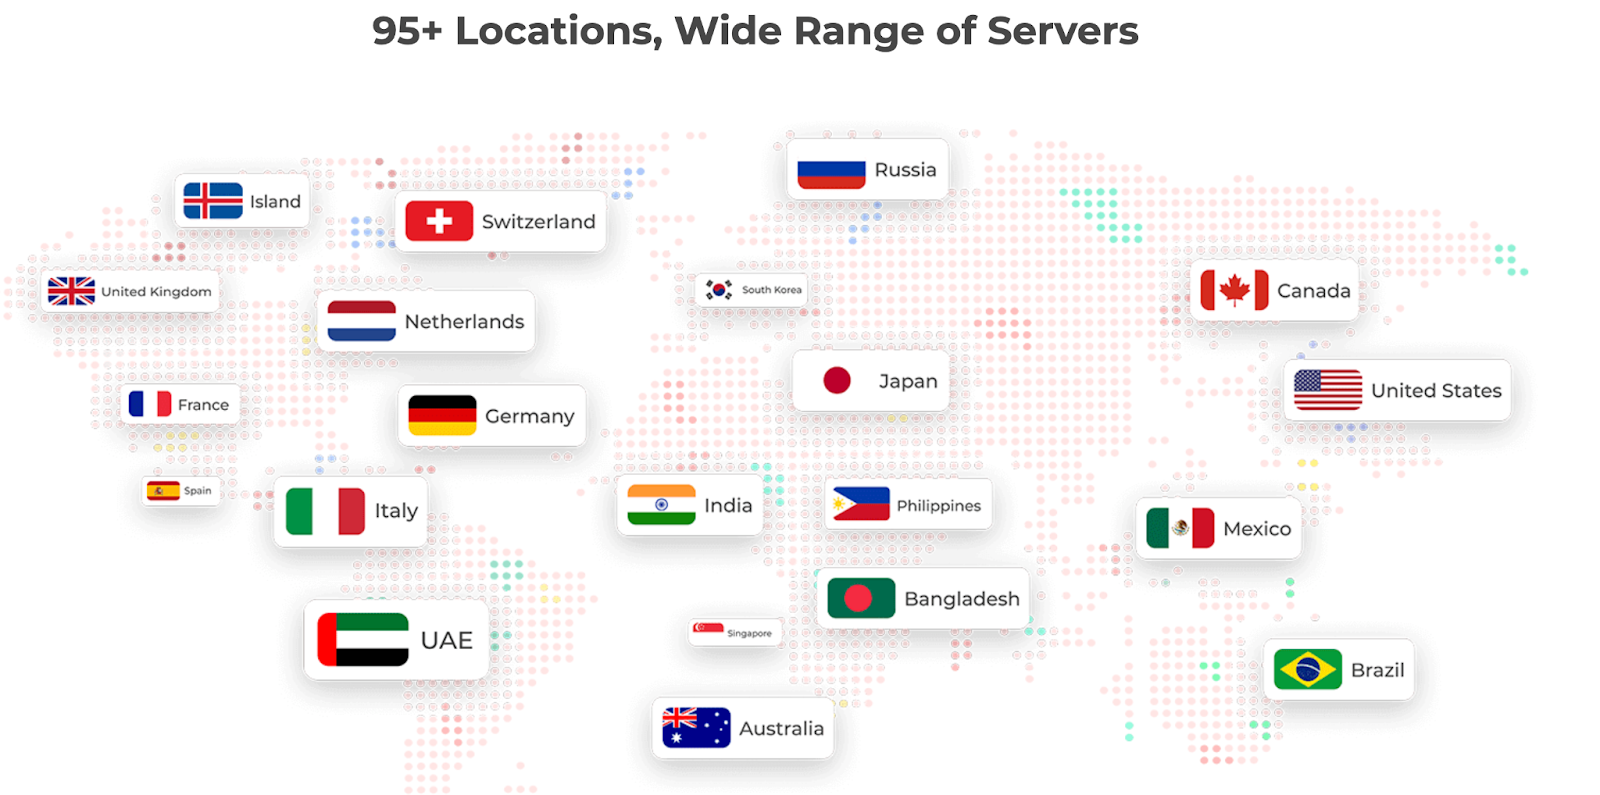 range of servers in 95+ locations